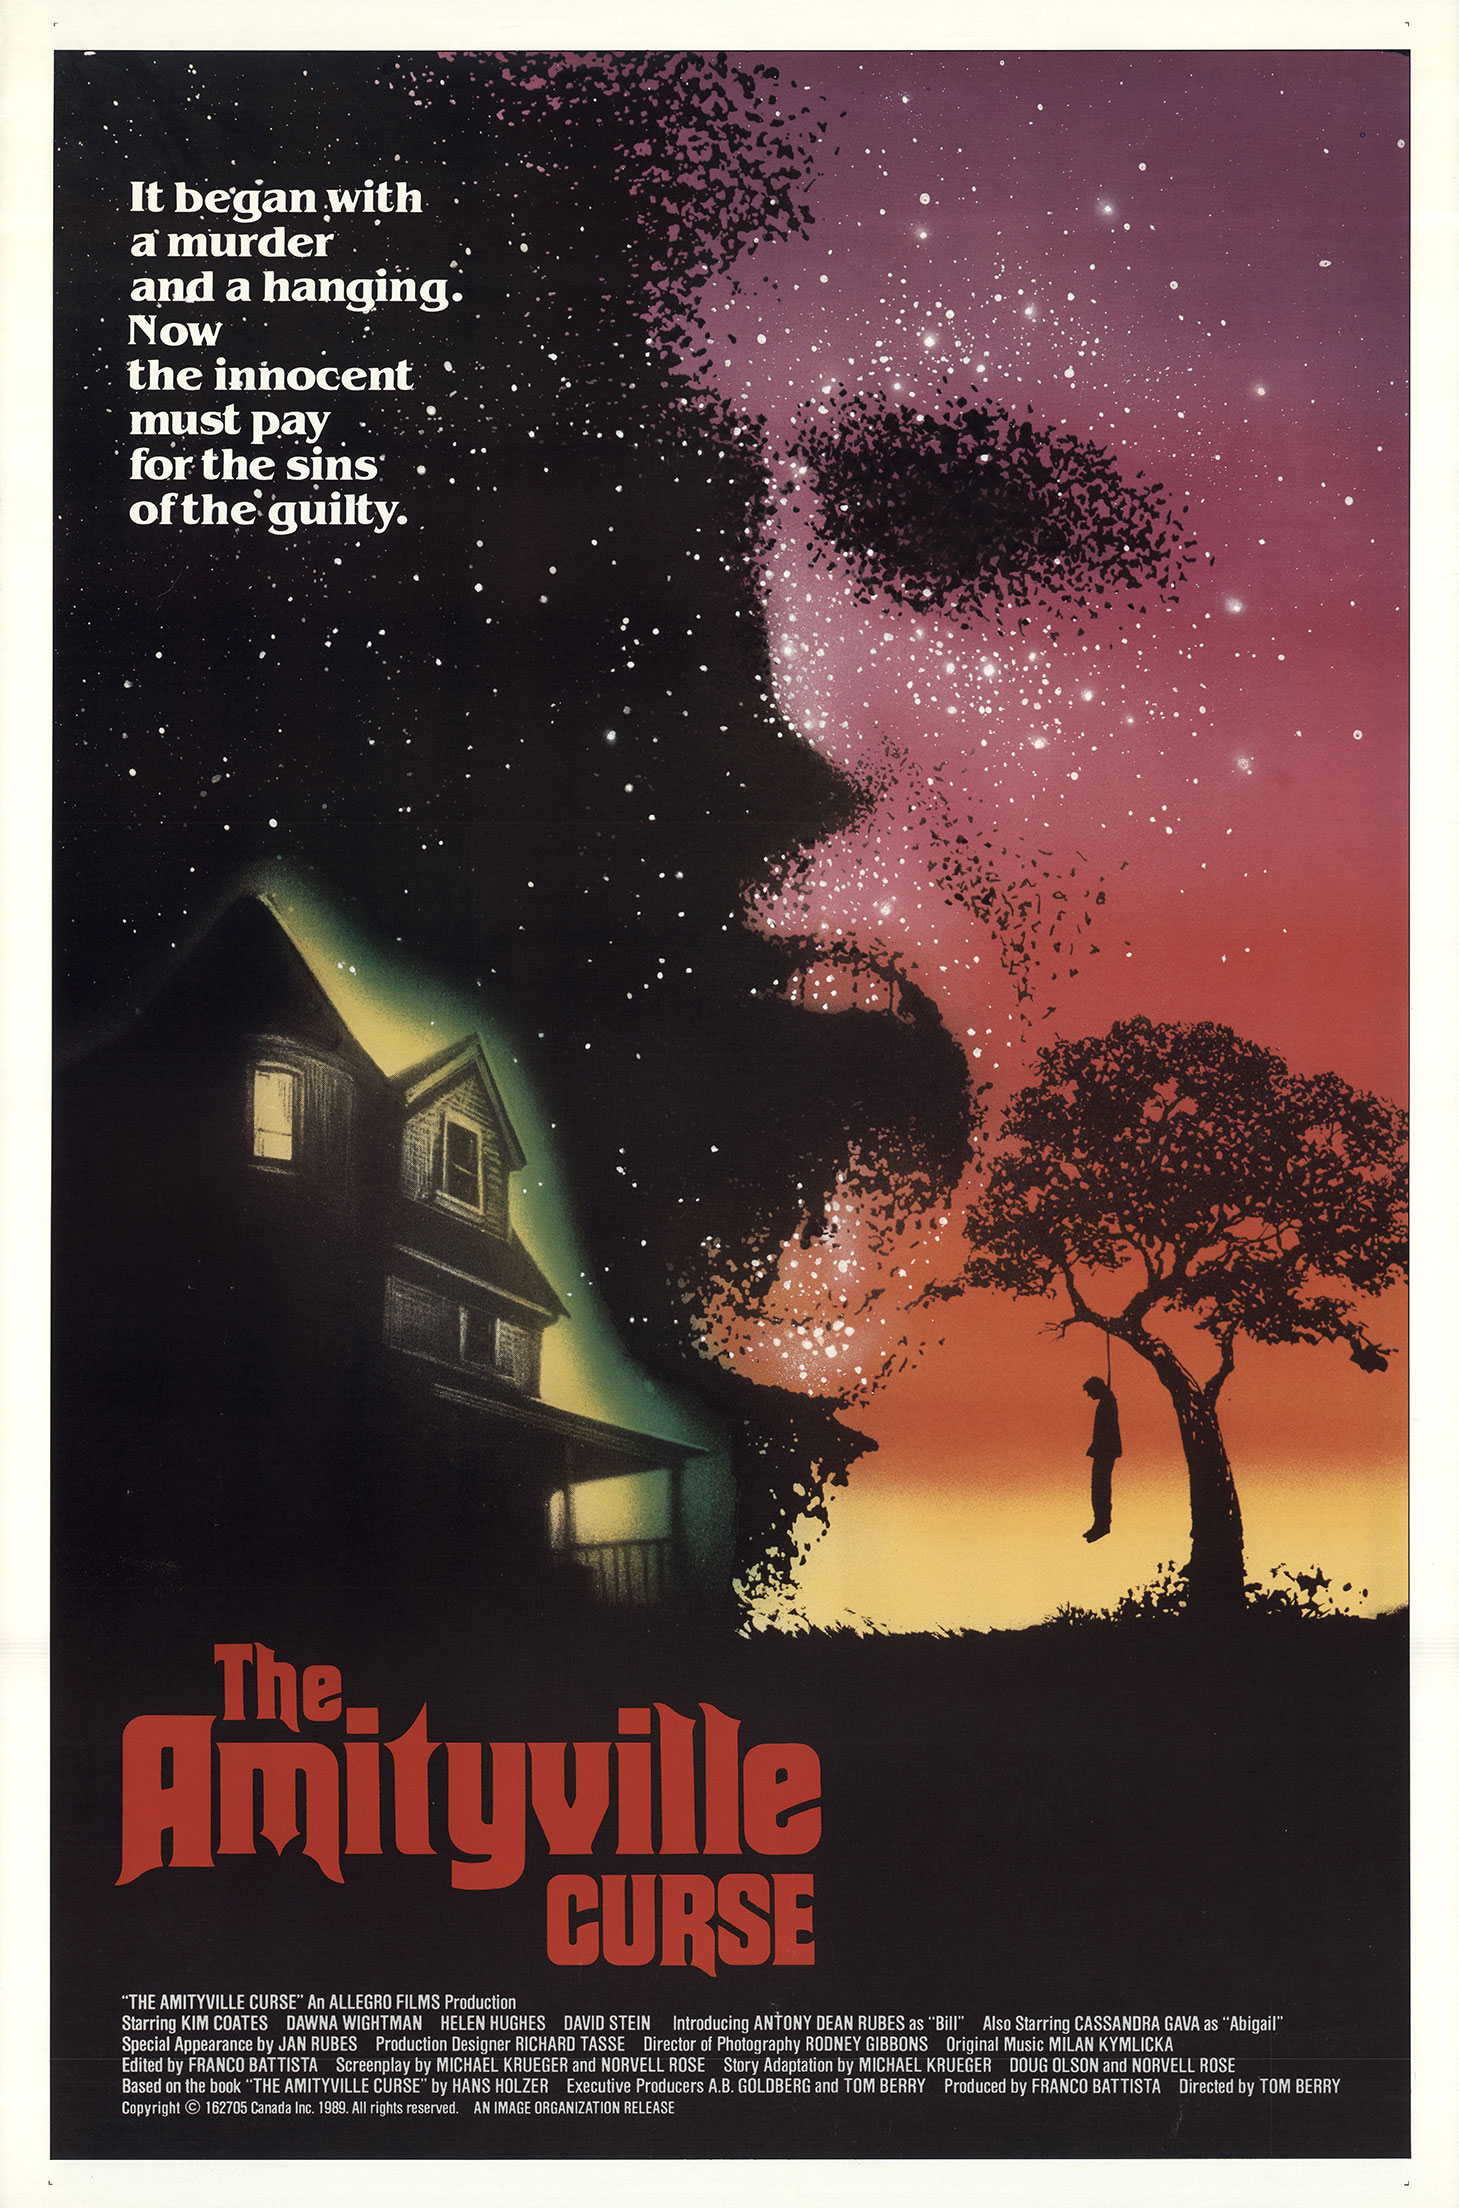 The Amityville Curse movie poster